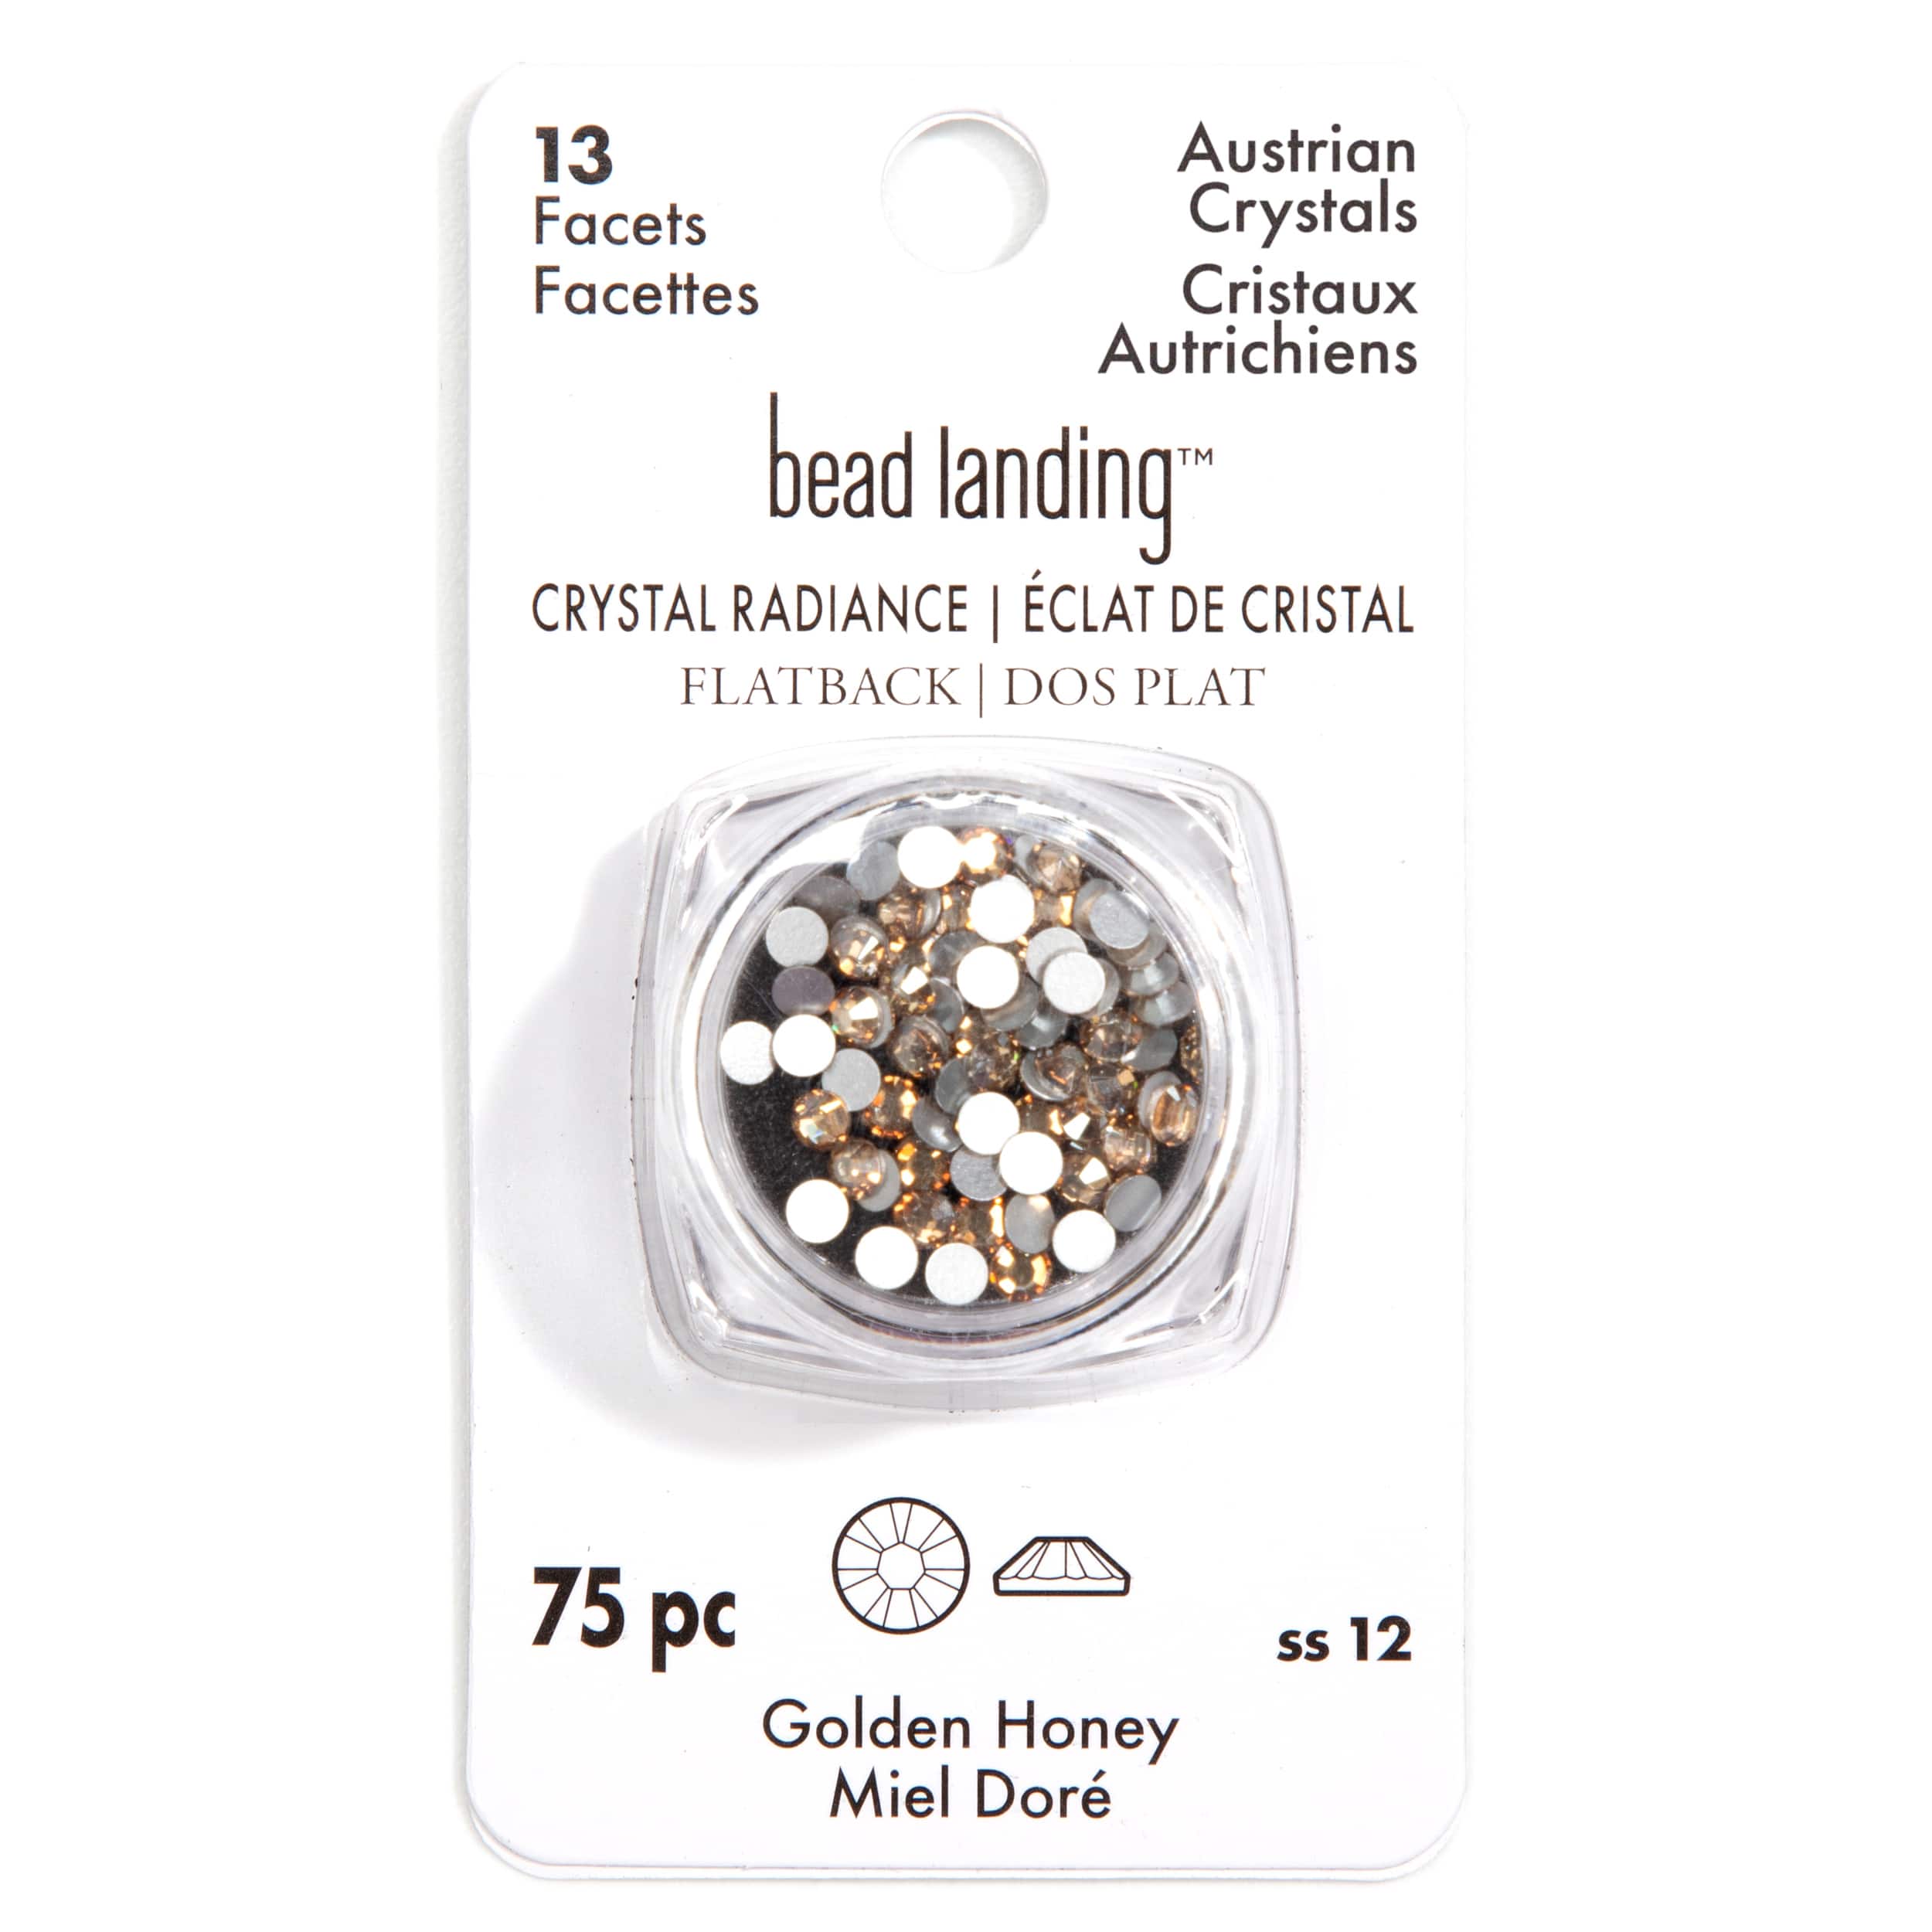 Crystal Radiance Glue Pen & Bead Trays by Bead Landing™